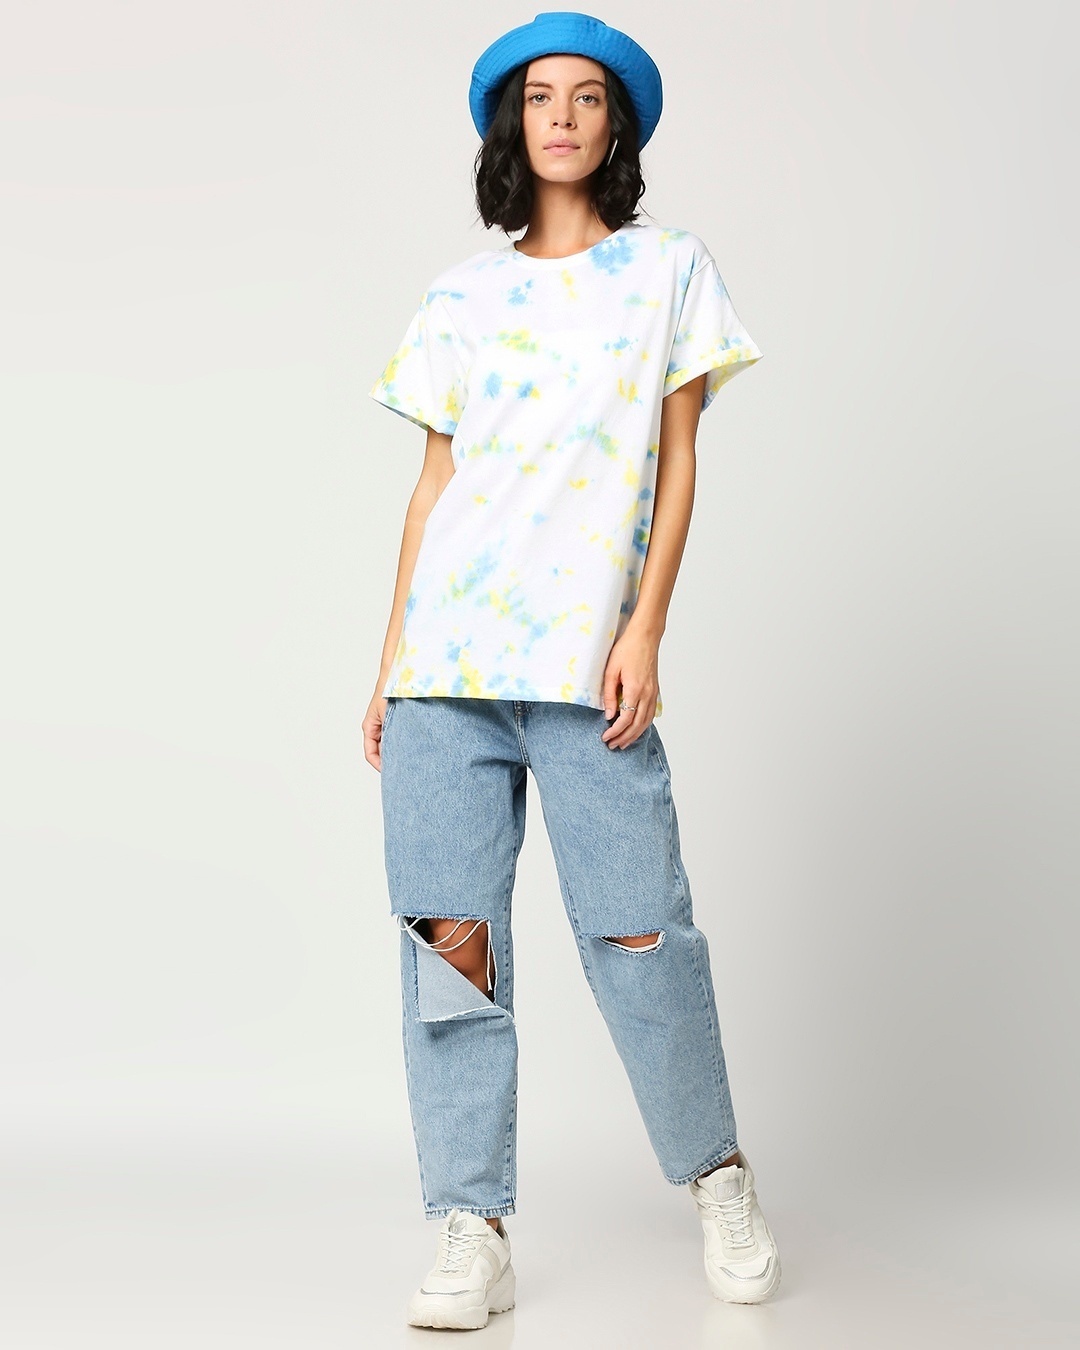 Shop Women's Tie & Dye Printed T-shirt